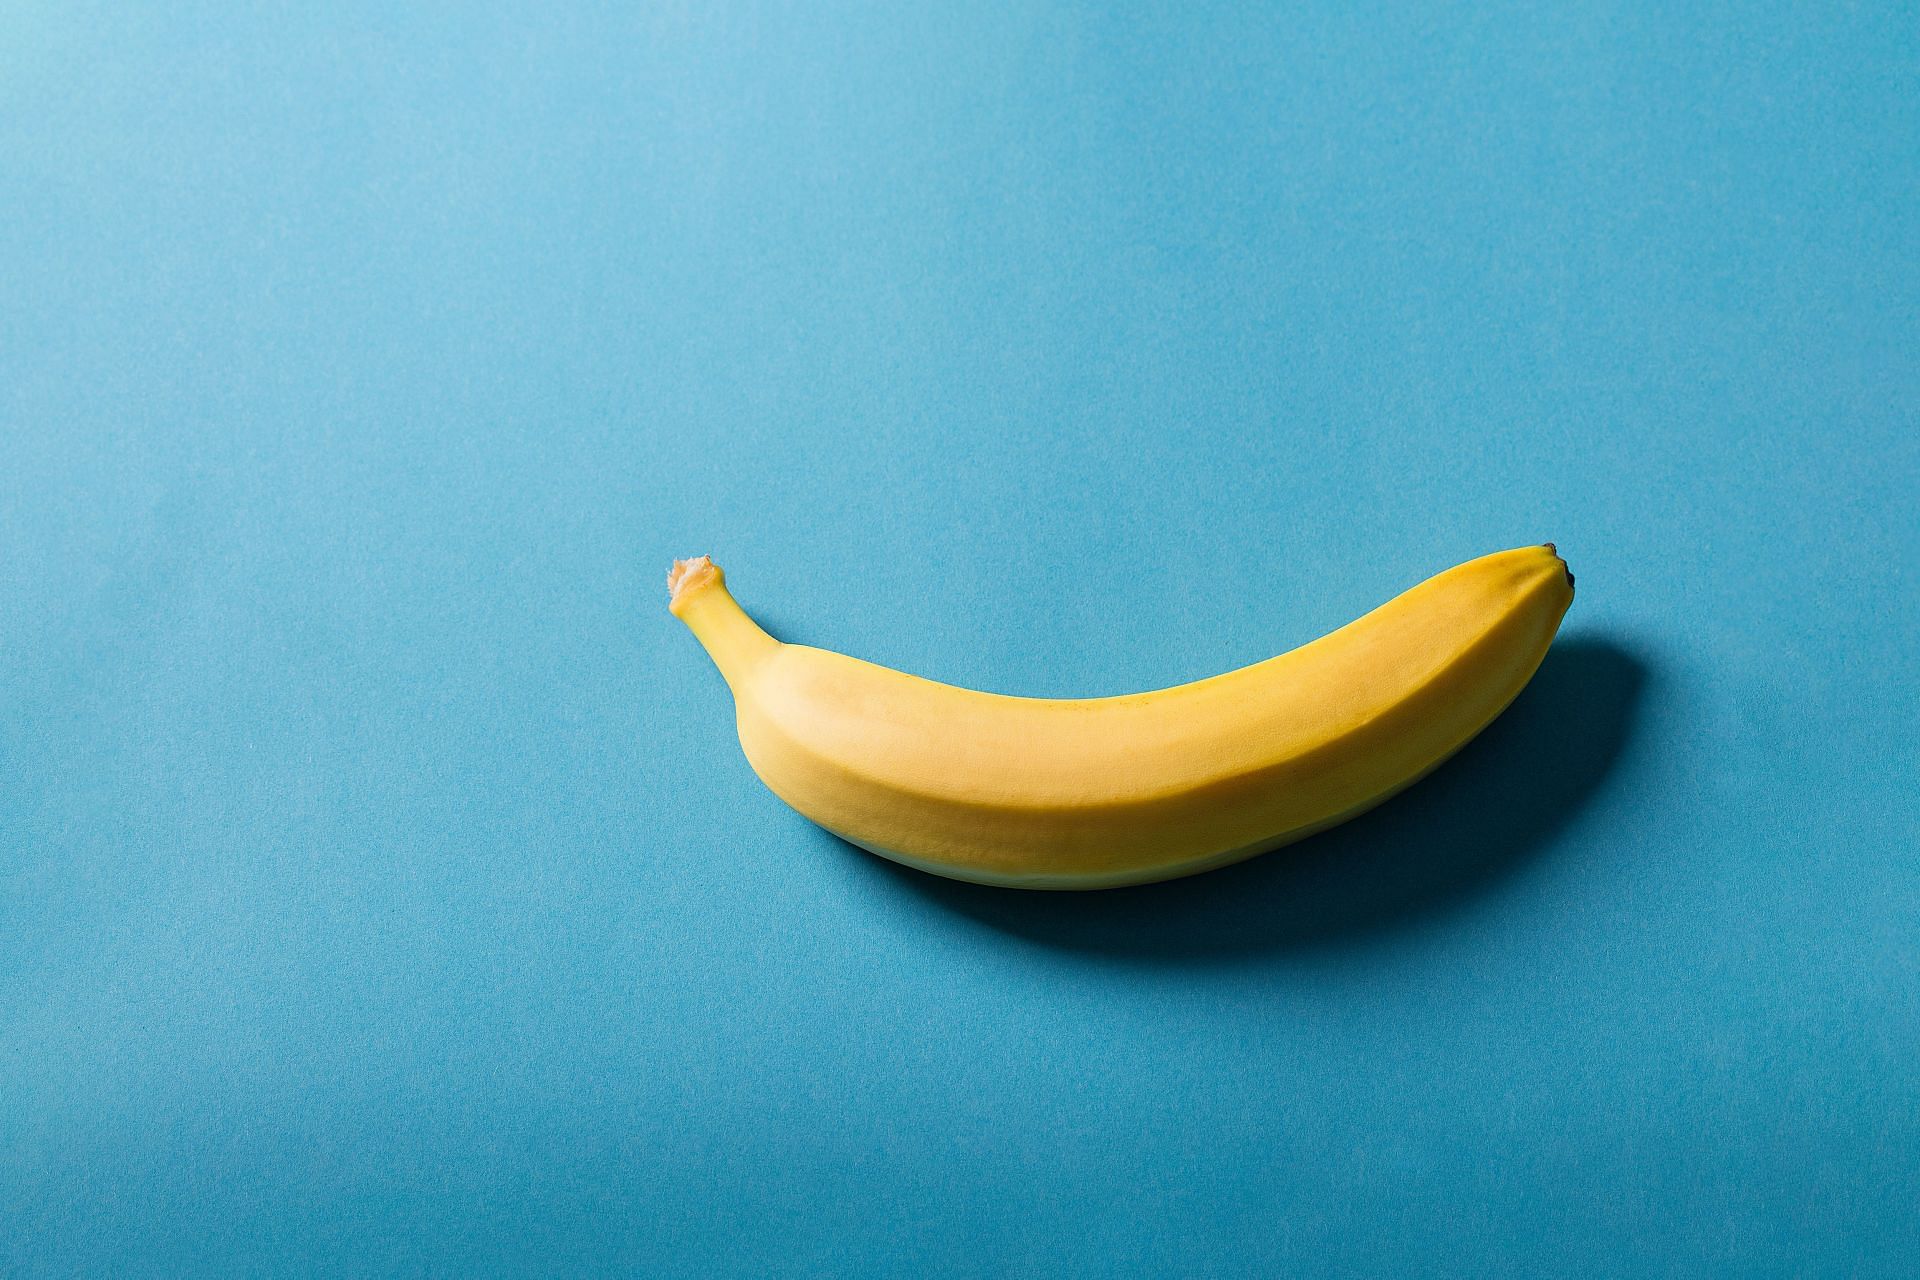 Eating bananas daily (Image via Unsplash/Deon)